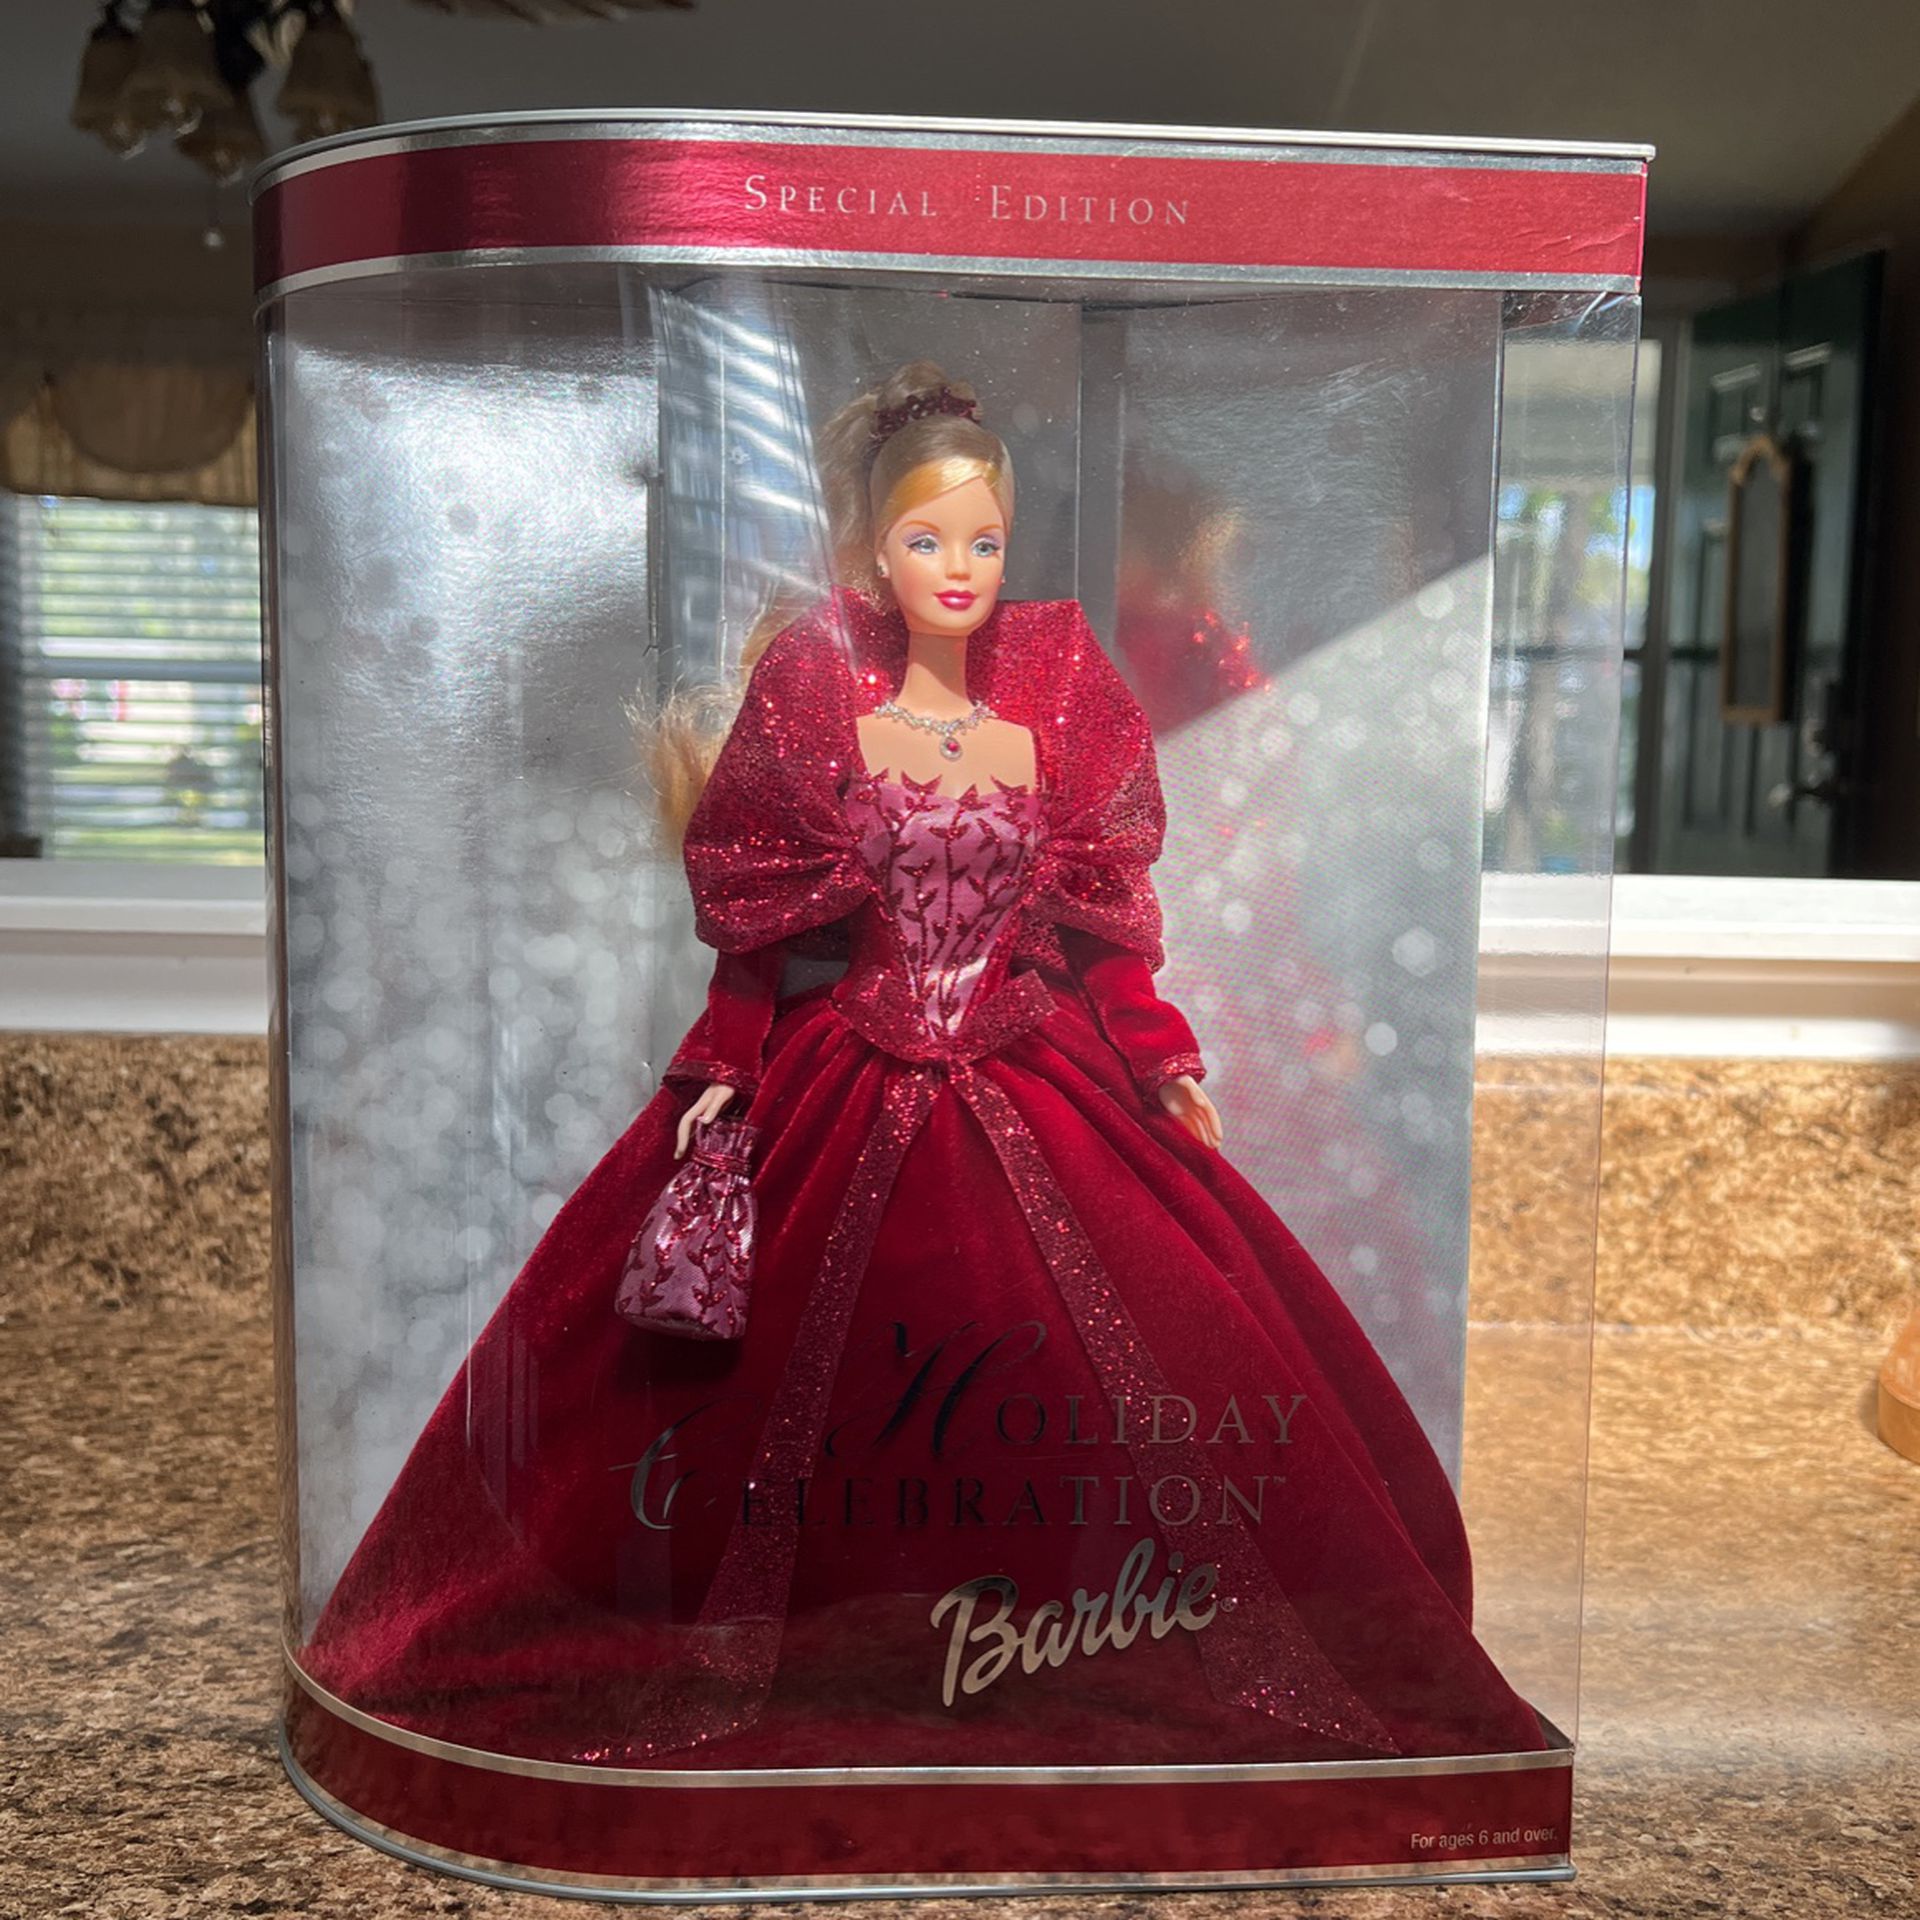 Special Edition Holiday Celebration Barbie